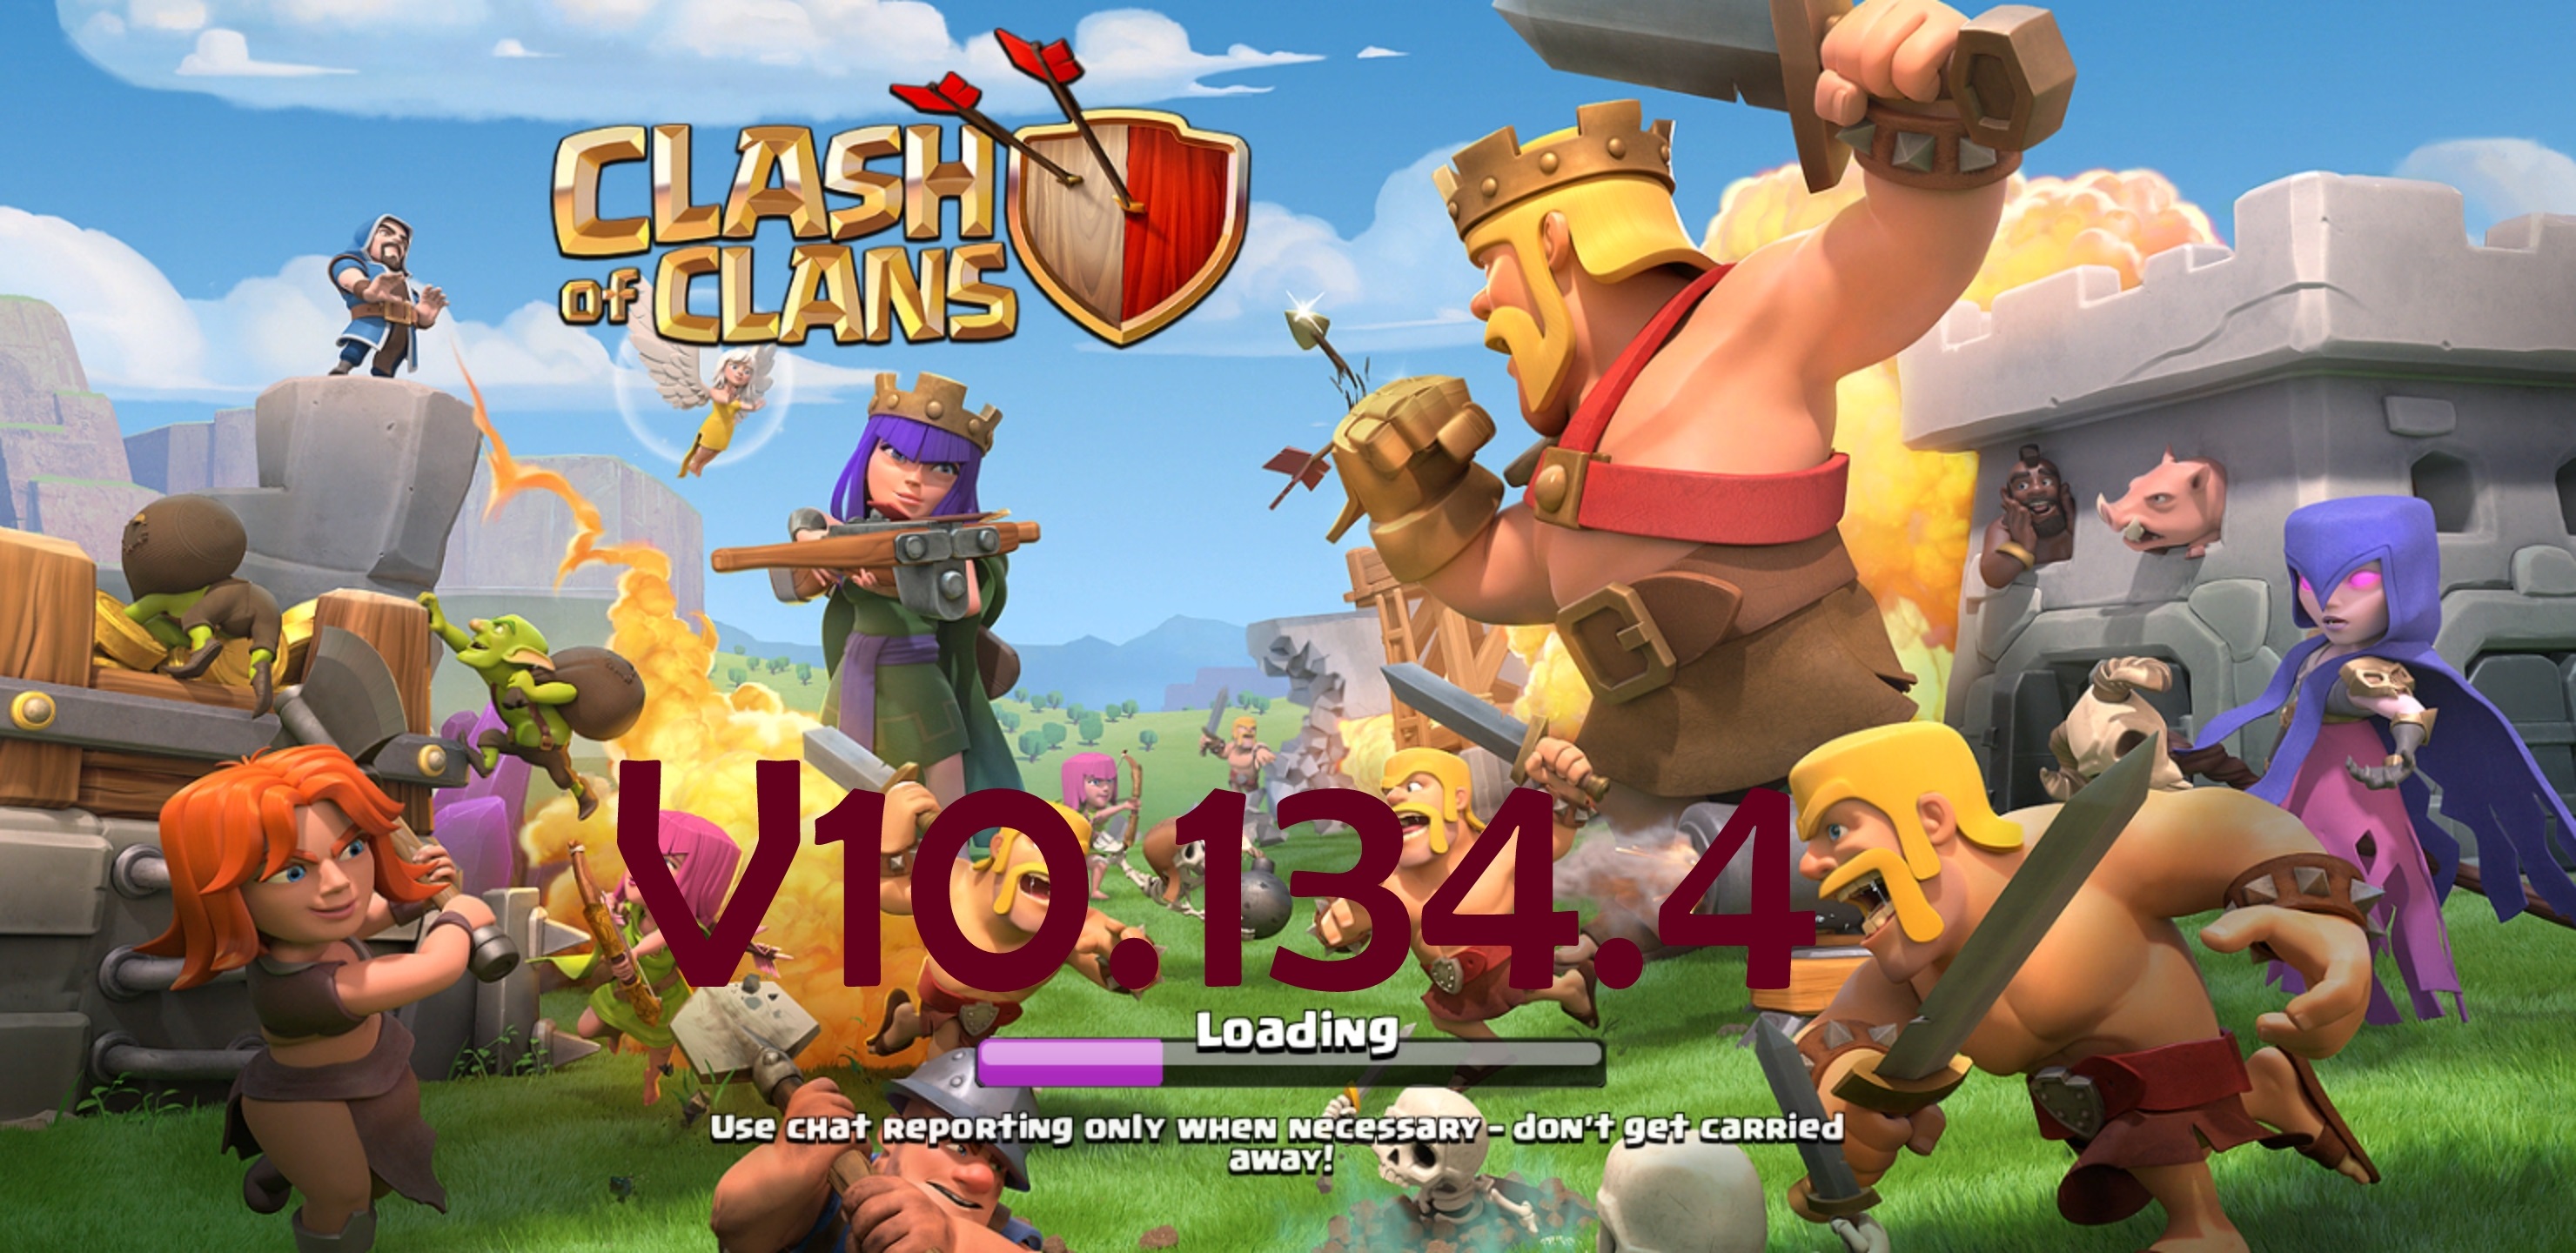 Clash of Clans v10.134.4 apk